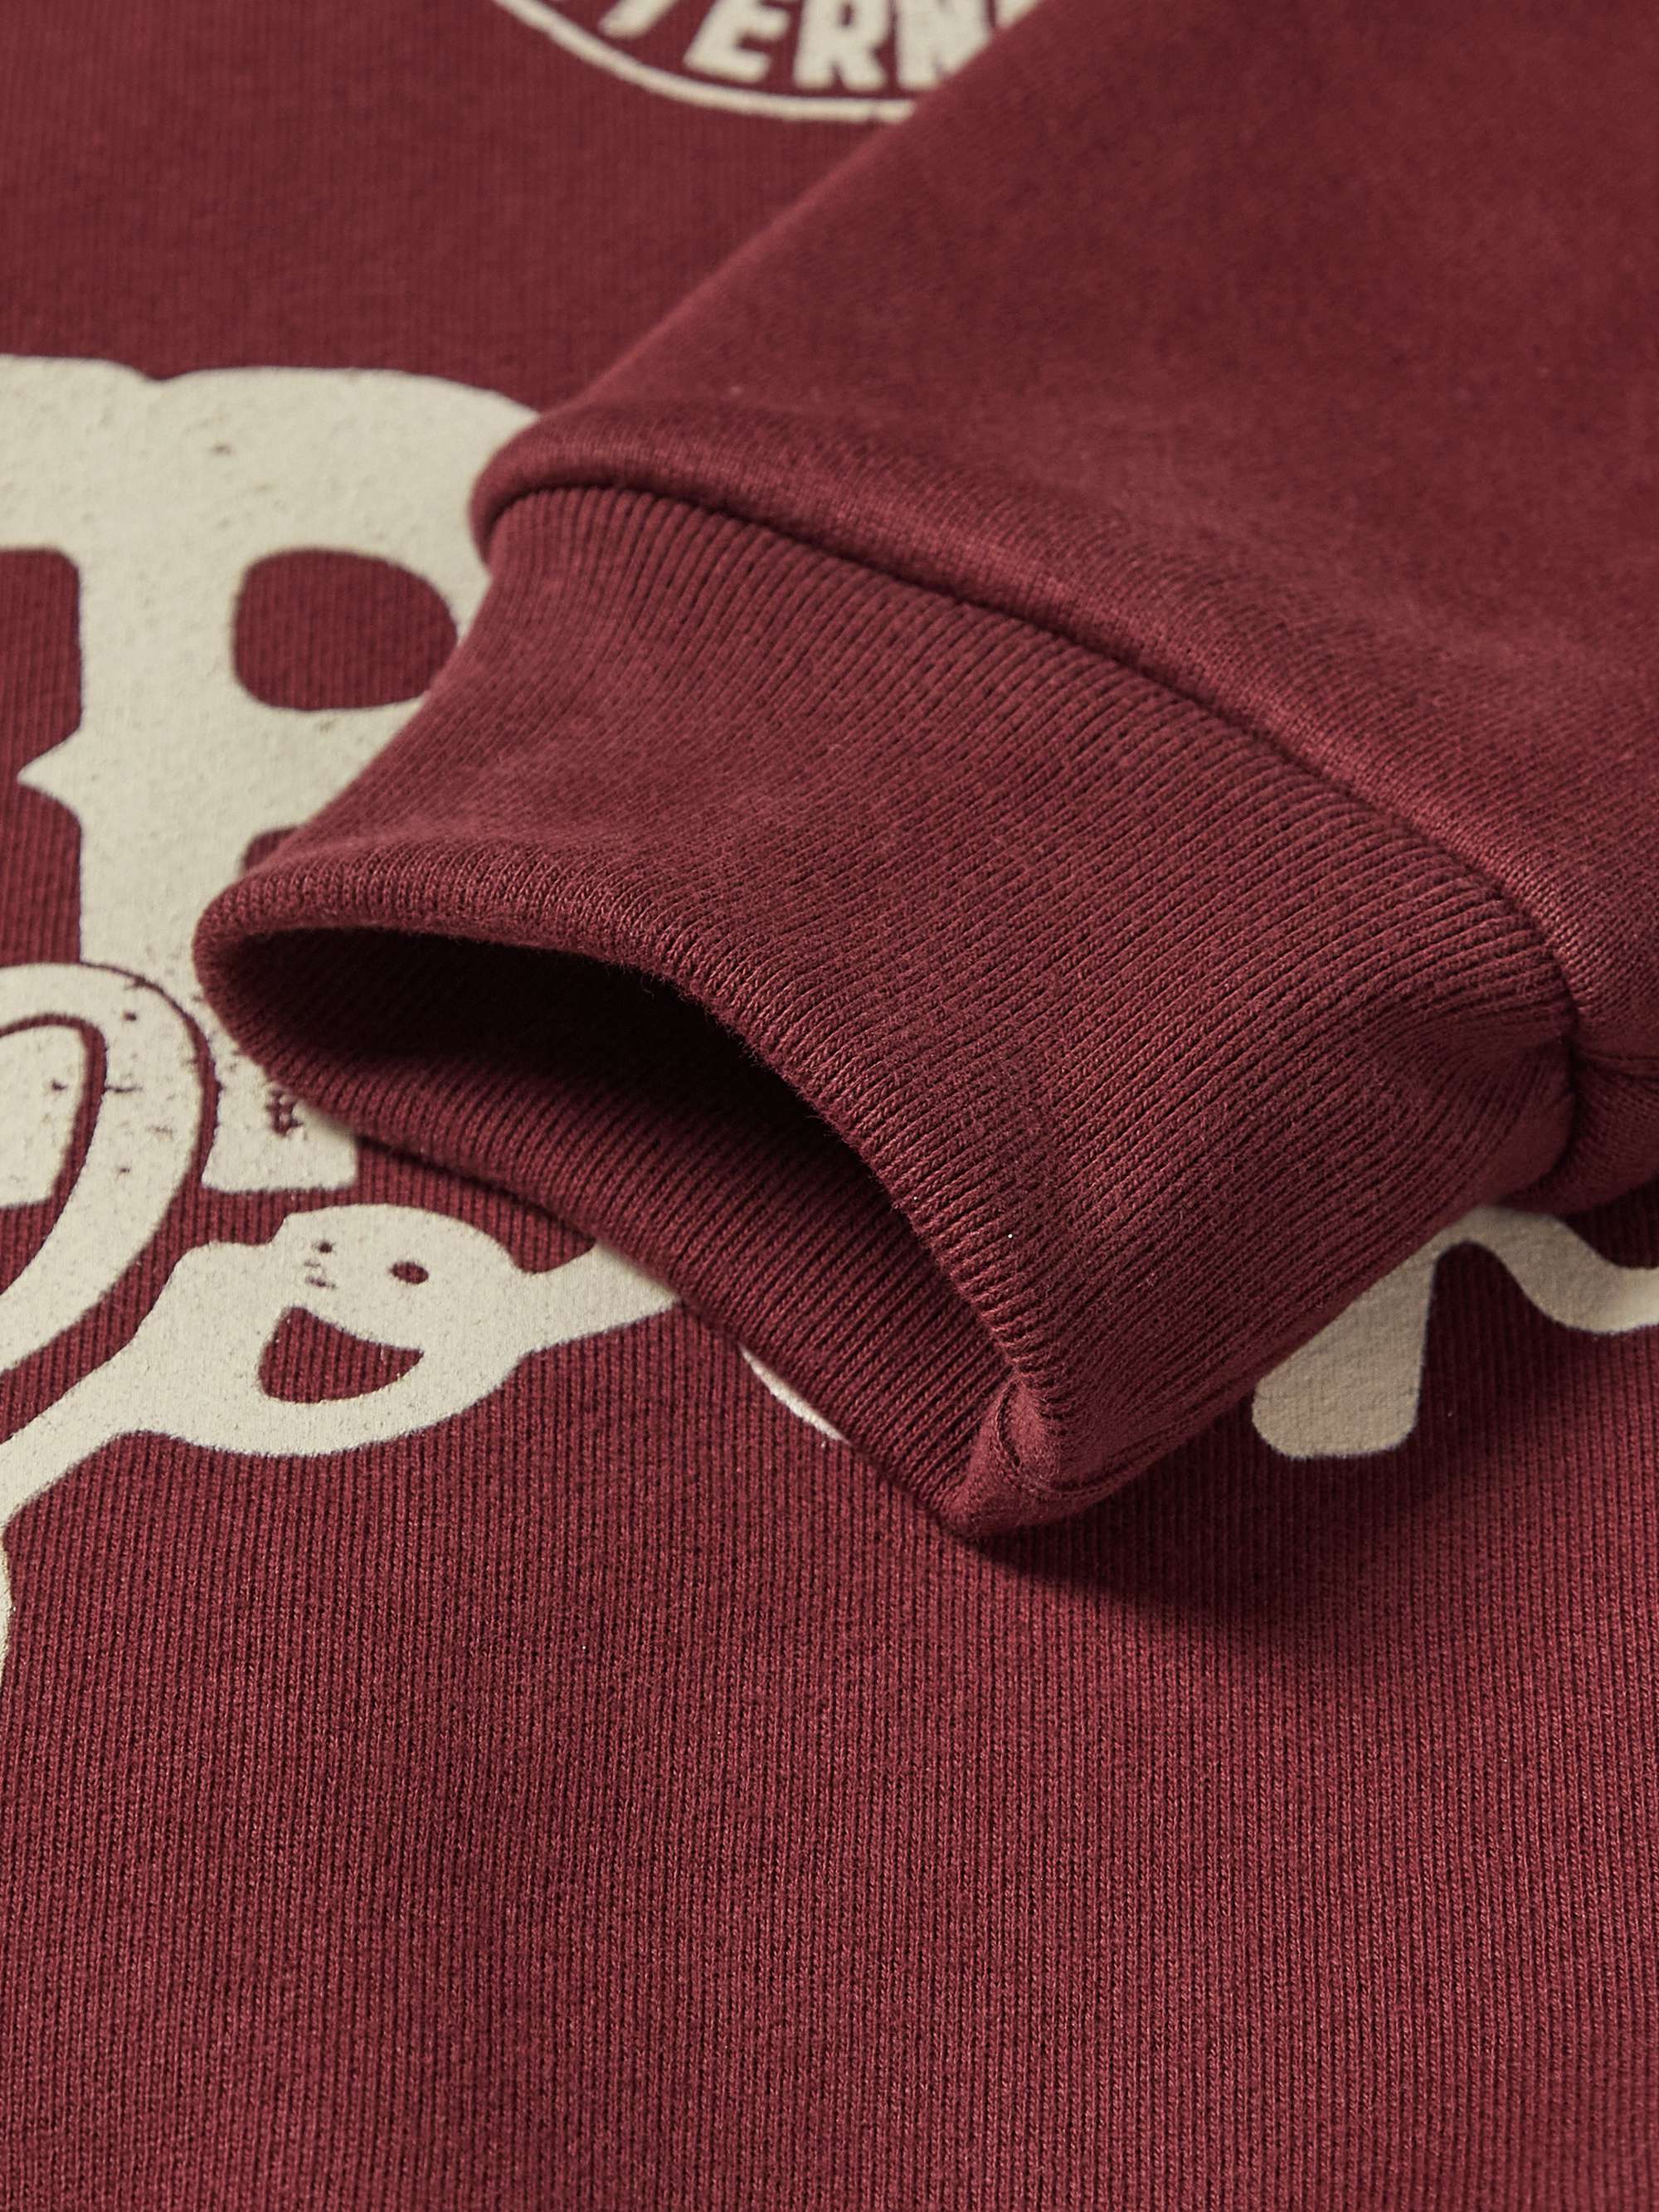 CHERRY LA Logo-Print Cotton-Jersey Sweatshirt